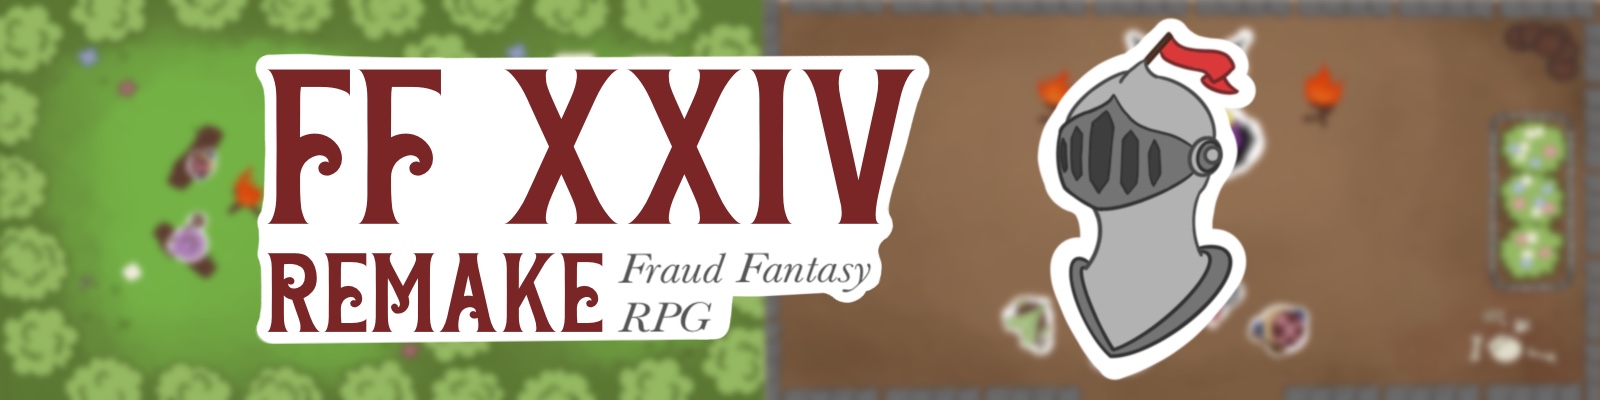 FF XXIV Remake: Fraud Fantasy RPG - GLOBAL GAME JAM 2024